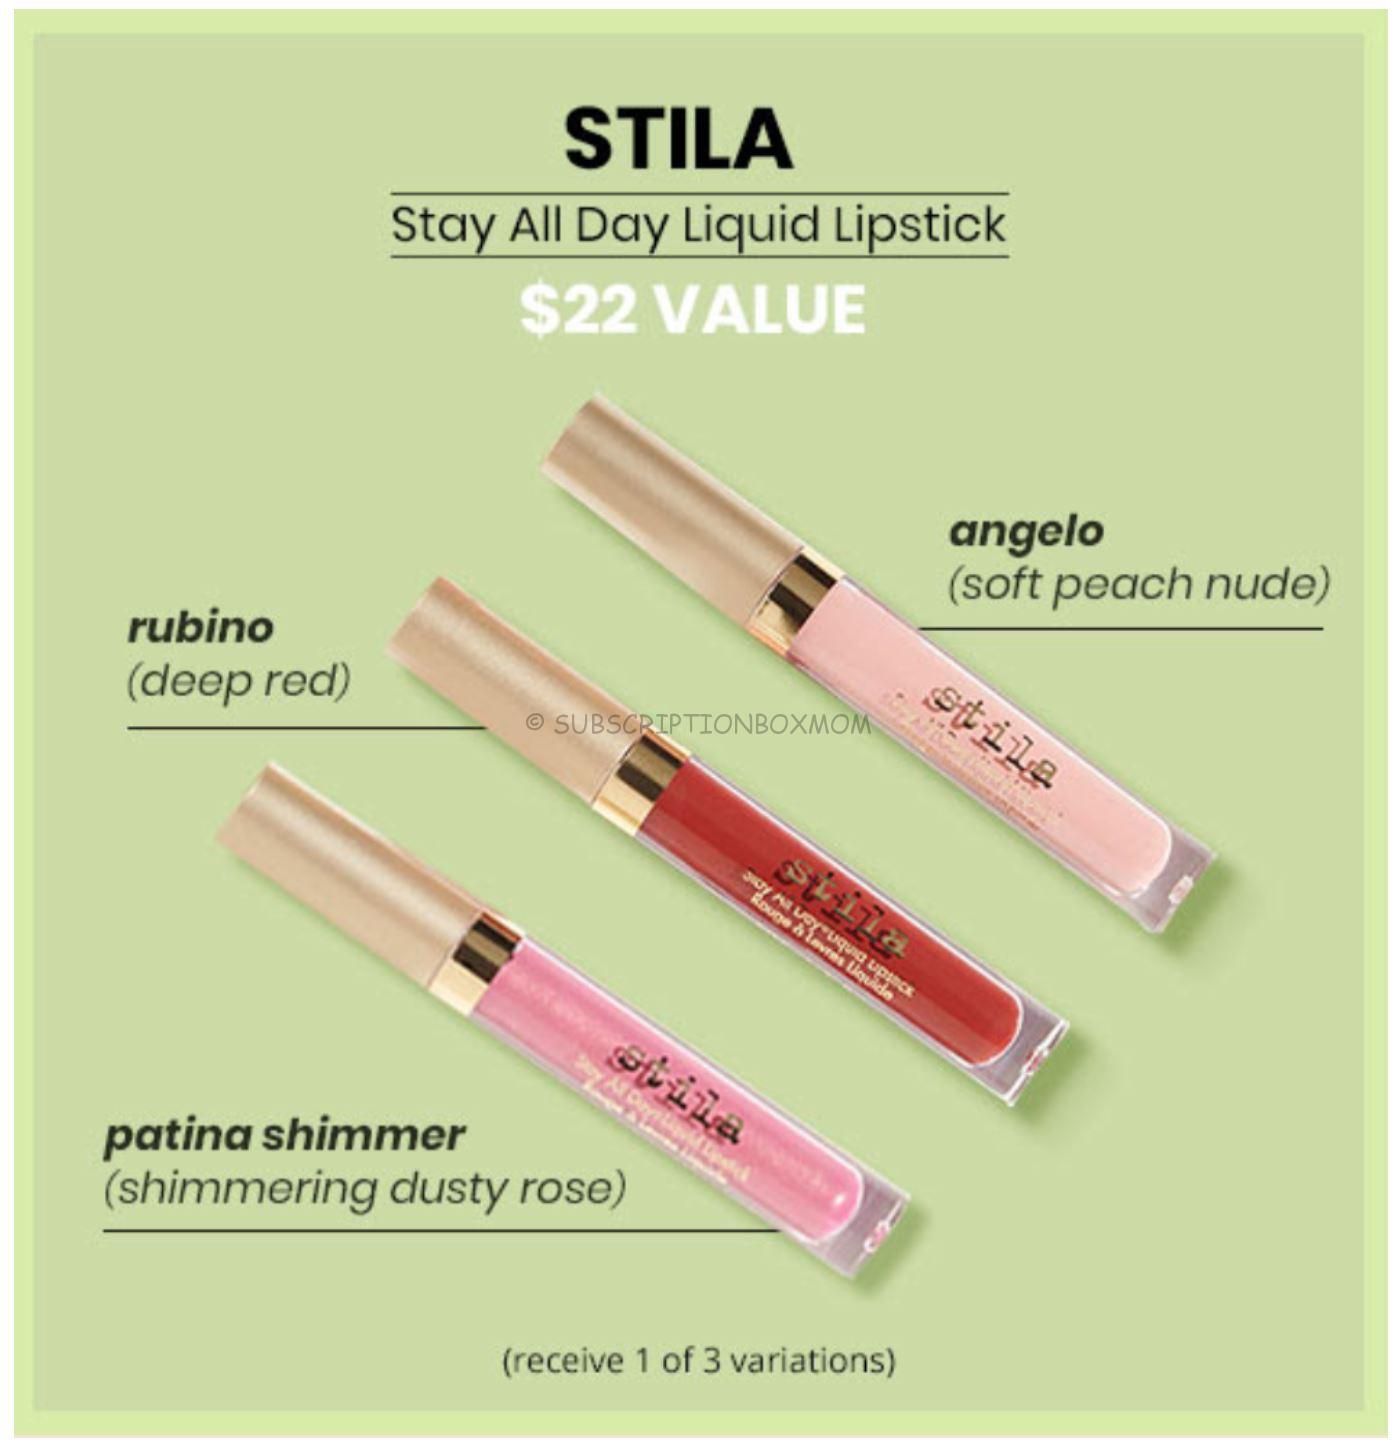 STILA Stay All Day Liquid Lipstick